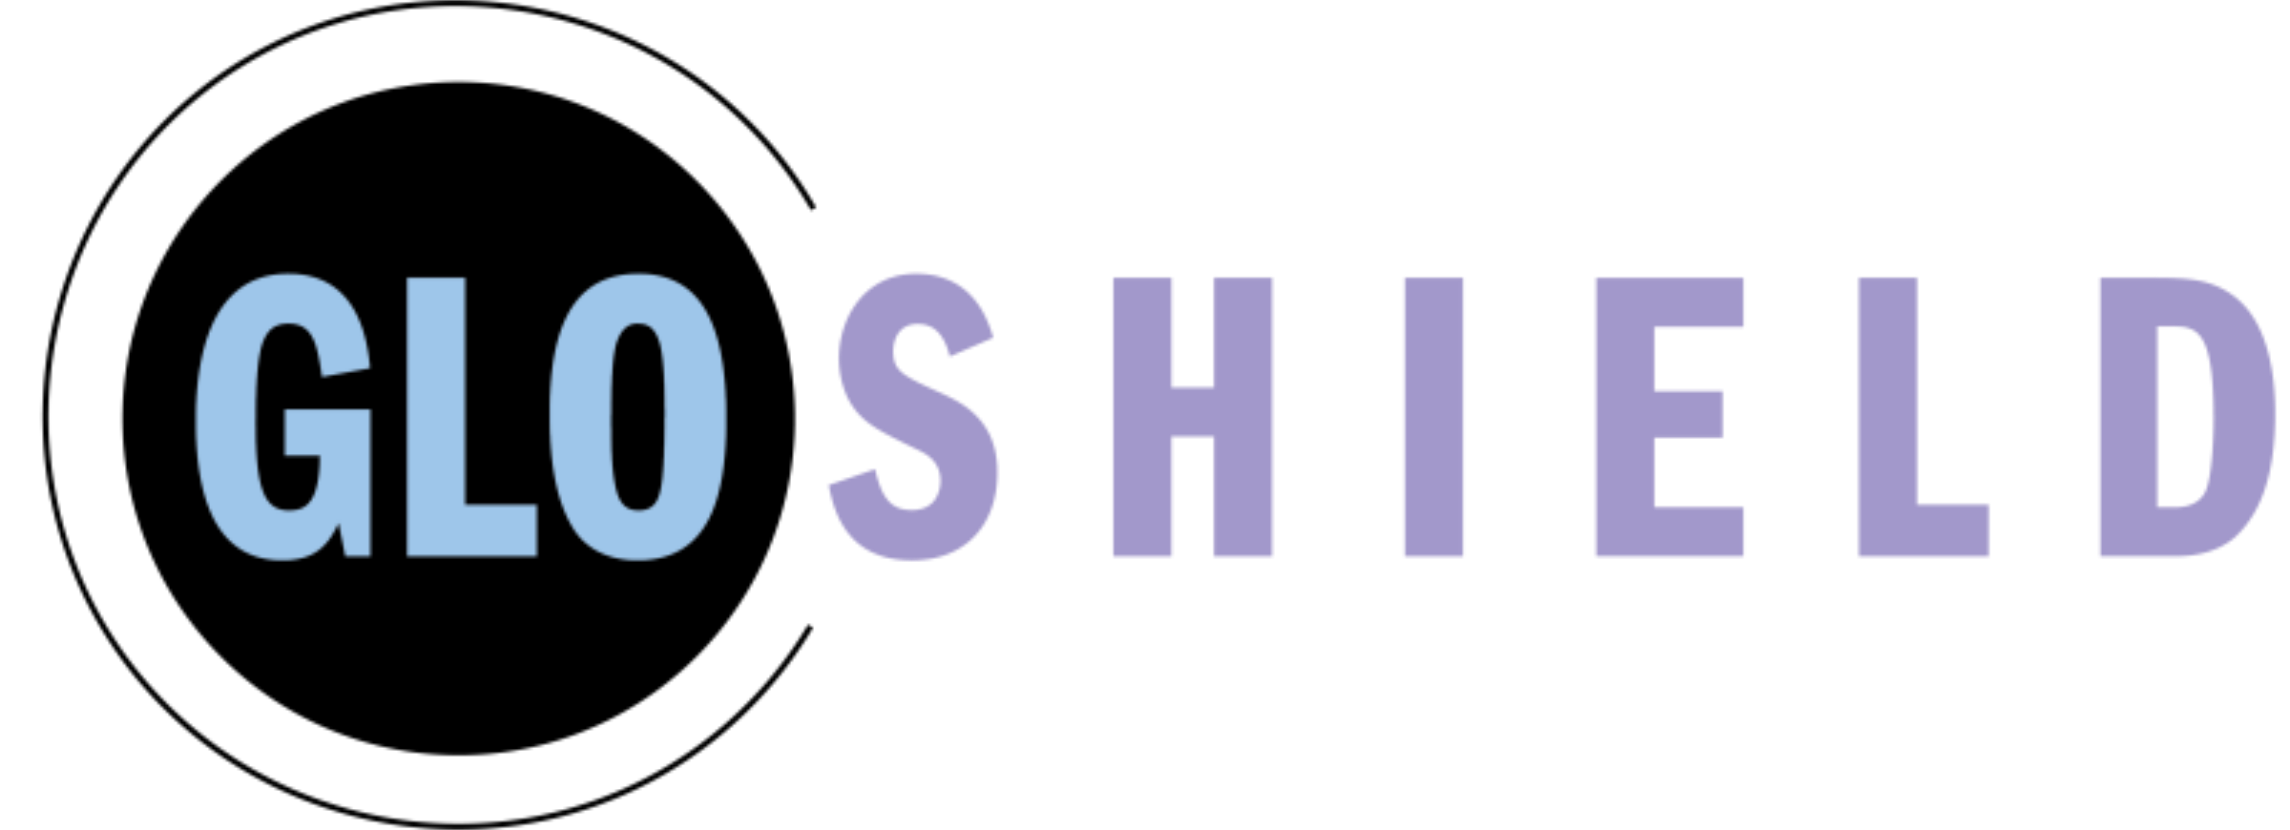 GloShield Logo